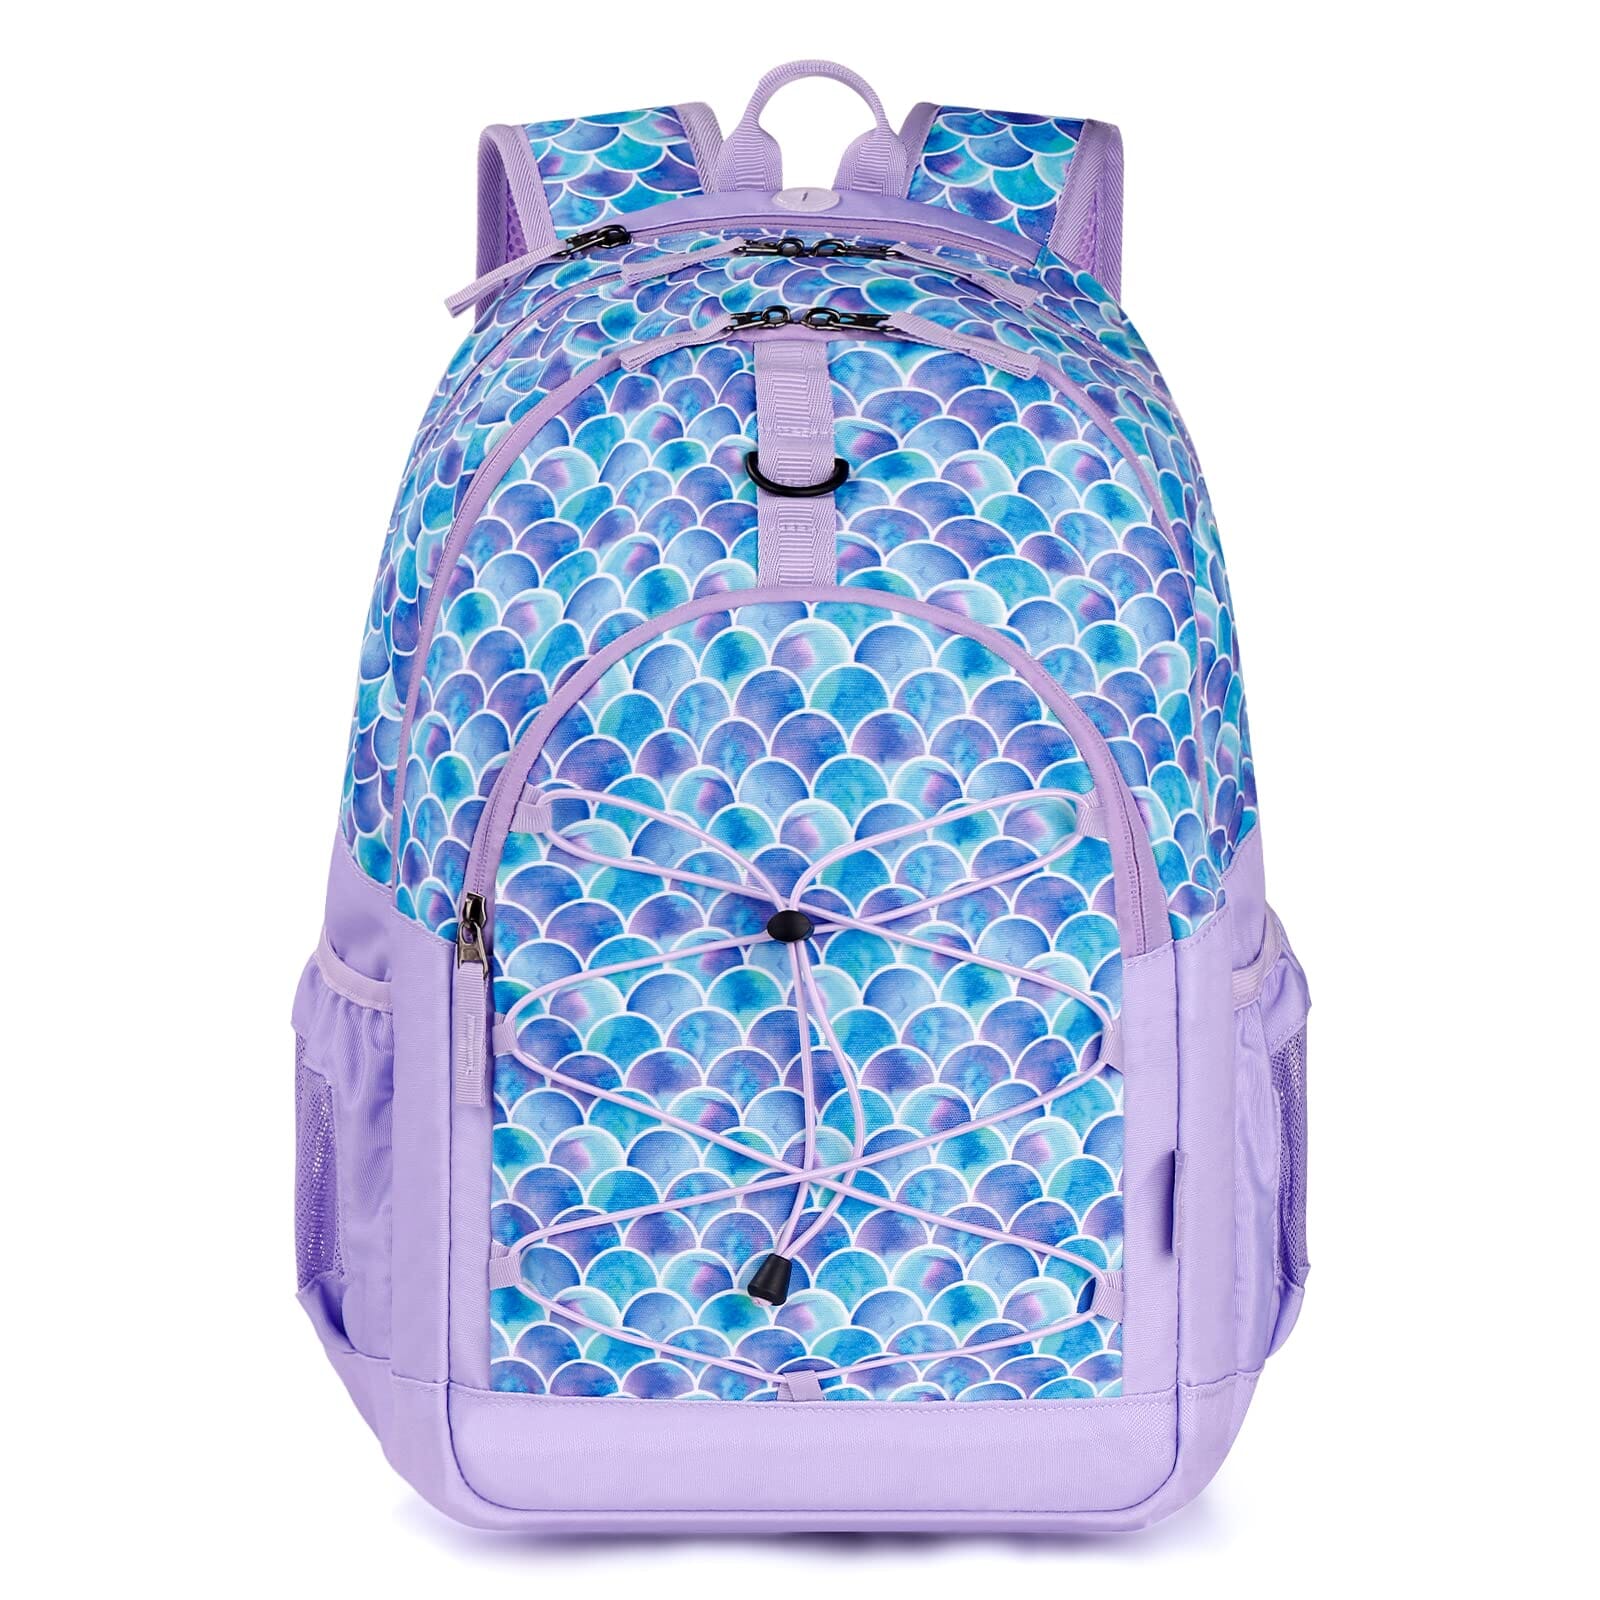 Choco Mocha Mermaid Backpack for Teen Girls, Travel School Backpack for Kids Middle School Large Bookbag 18 Inch, Purple chocomochakids 